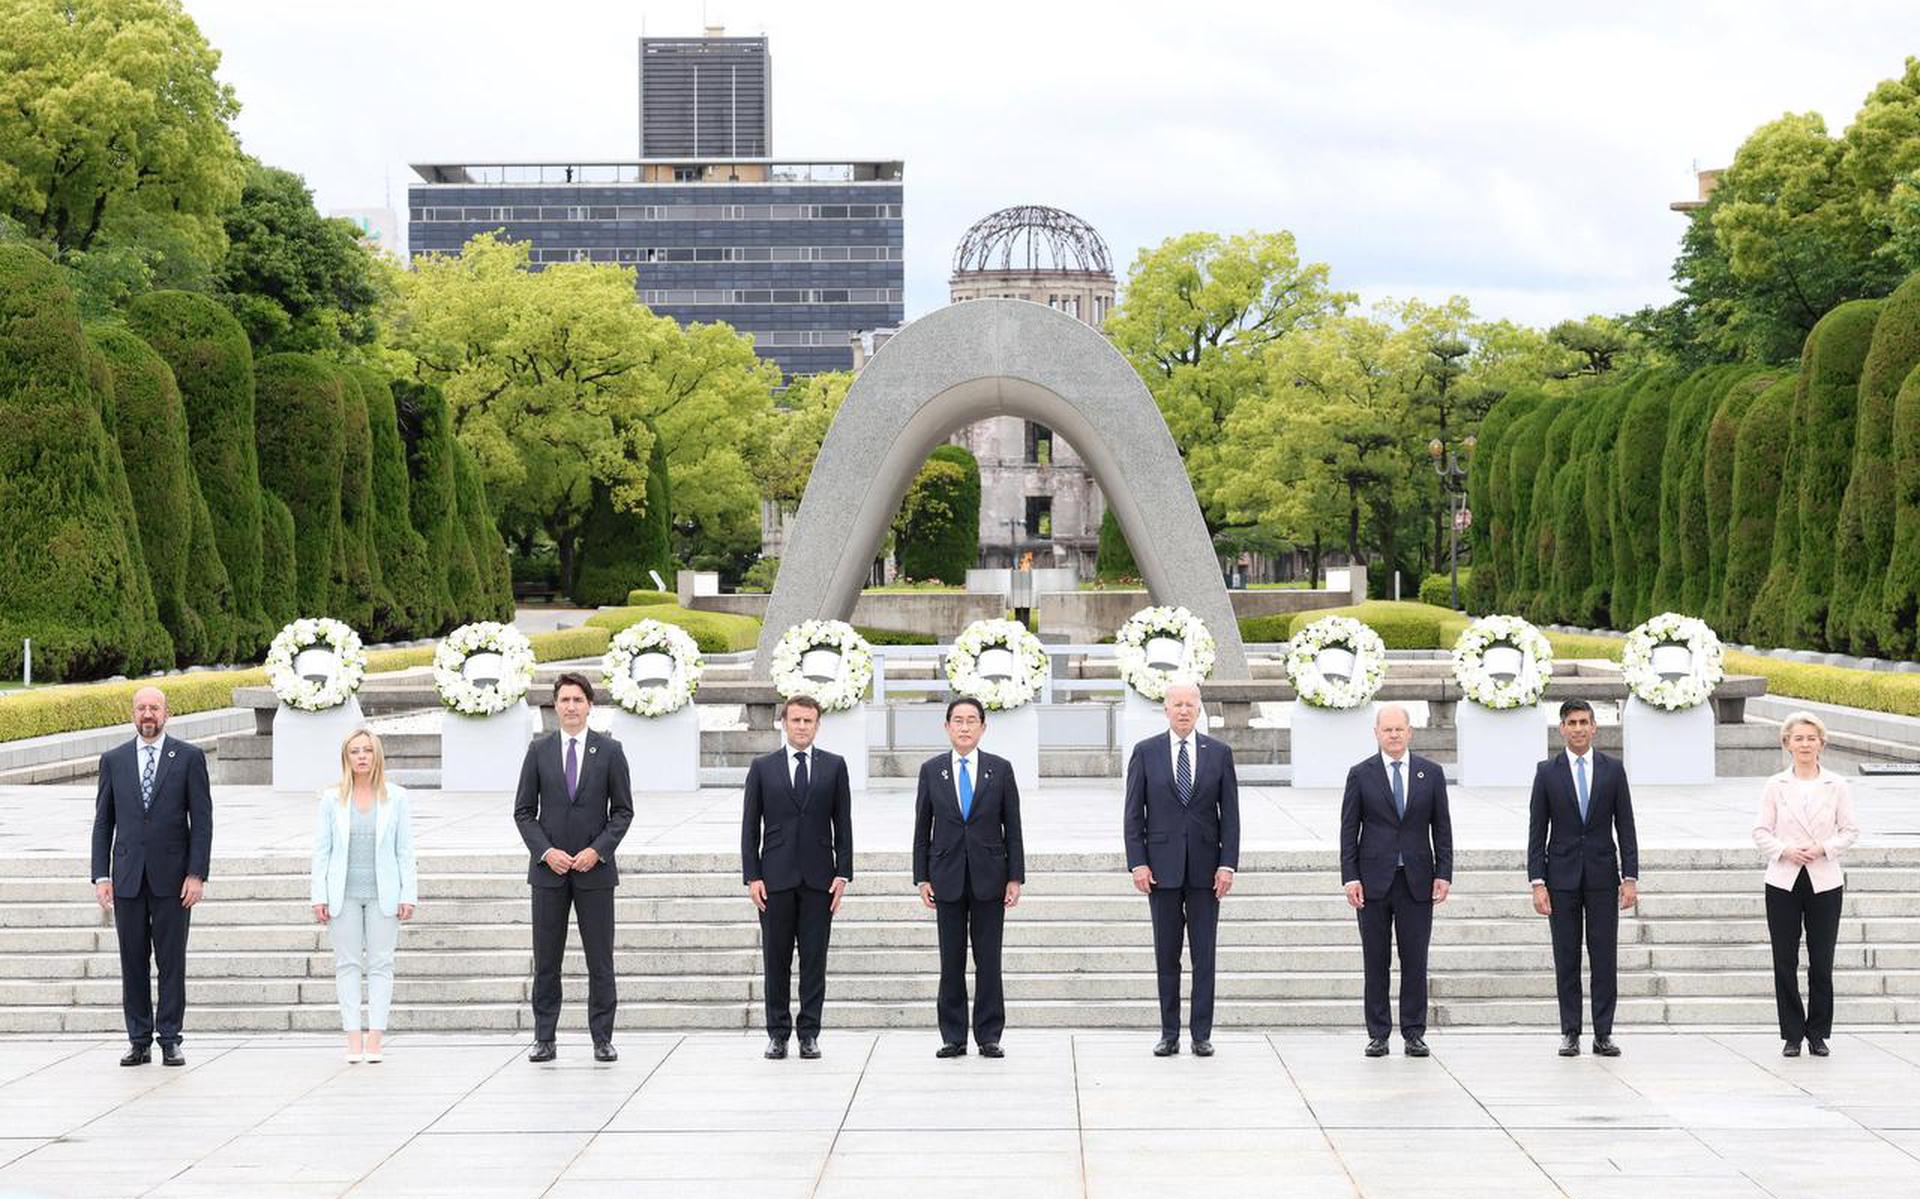 De leiders van de G7 waren afgelopen weekend bijeen in de Japanse stad Hiroshima. Van links naar rechts Charles Michel (Europese Unie), Giorgia Meloni (Italië), Justin Trudeau (Canada), Emmanuel Macron (Frankrijk), Fumio Kishida (Japan), Joe Biden (Verenigde Staten), Olaf Scholz (Duitsland), Rishi Sunak (Groot-Brittannië) en Ursula von der Leyen (Europese Commissie).